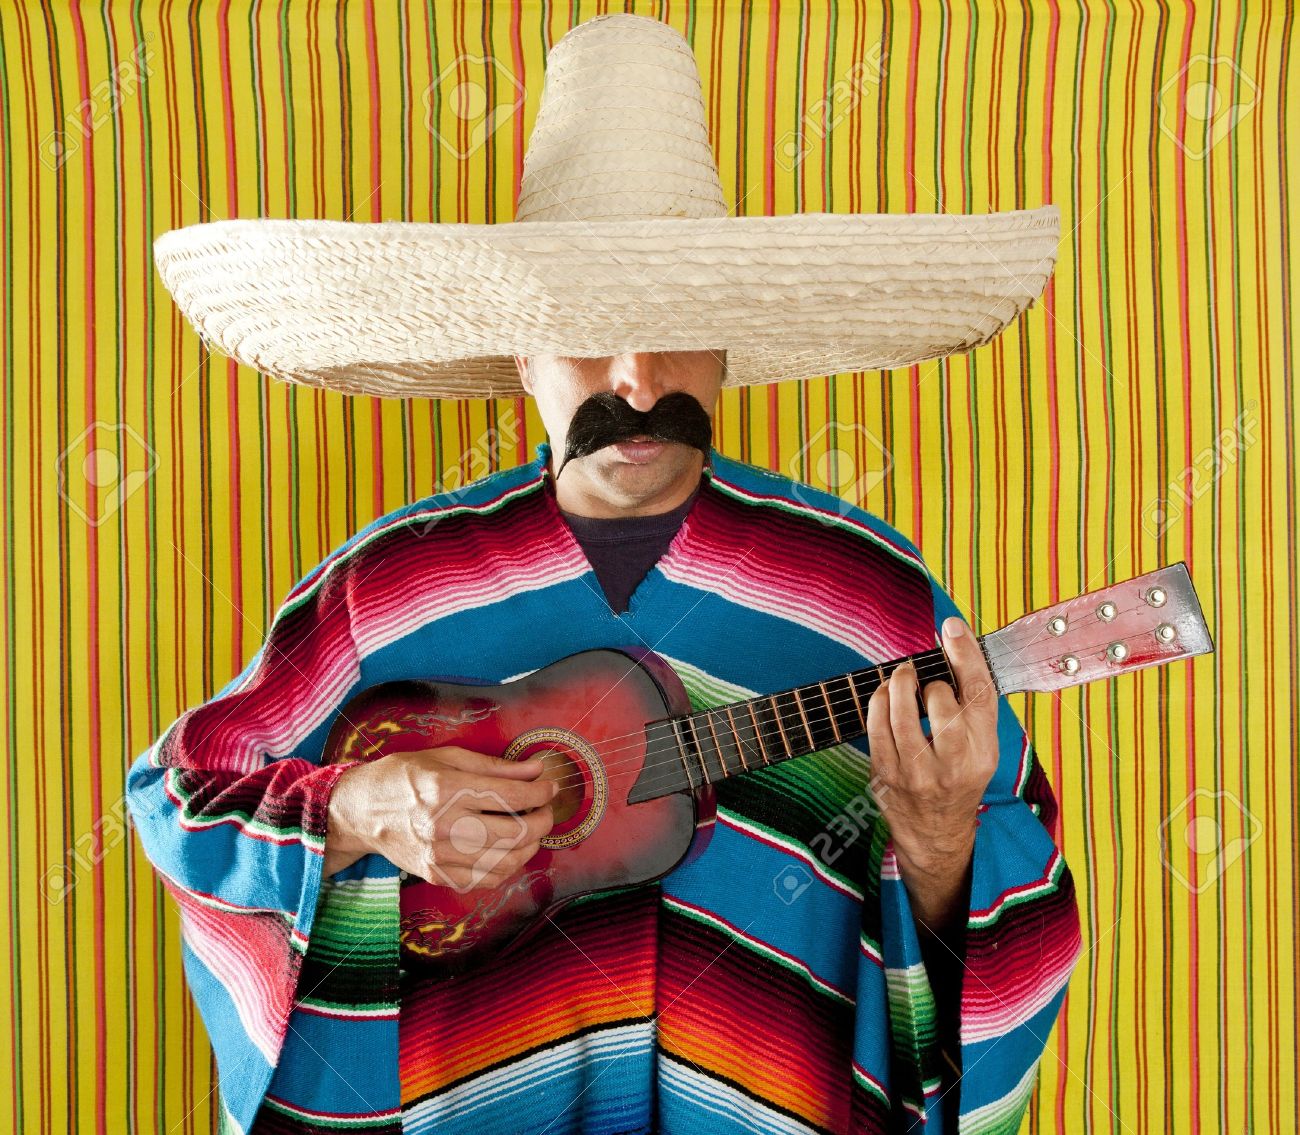 9706258-Mexican-man-serape-poncho-sombrero-playing-guitar-typical-Mexico-Stock-Photo.jpg